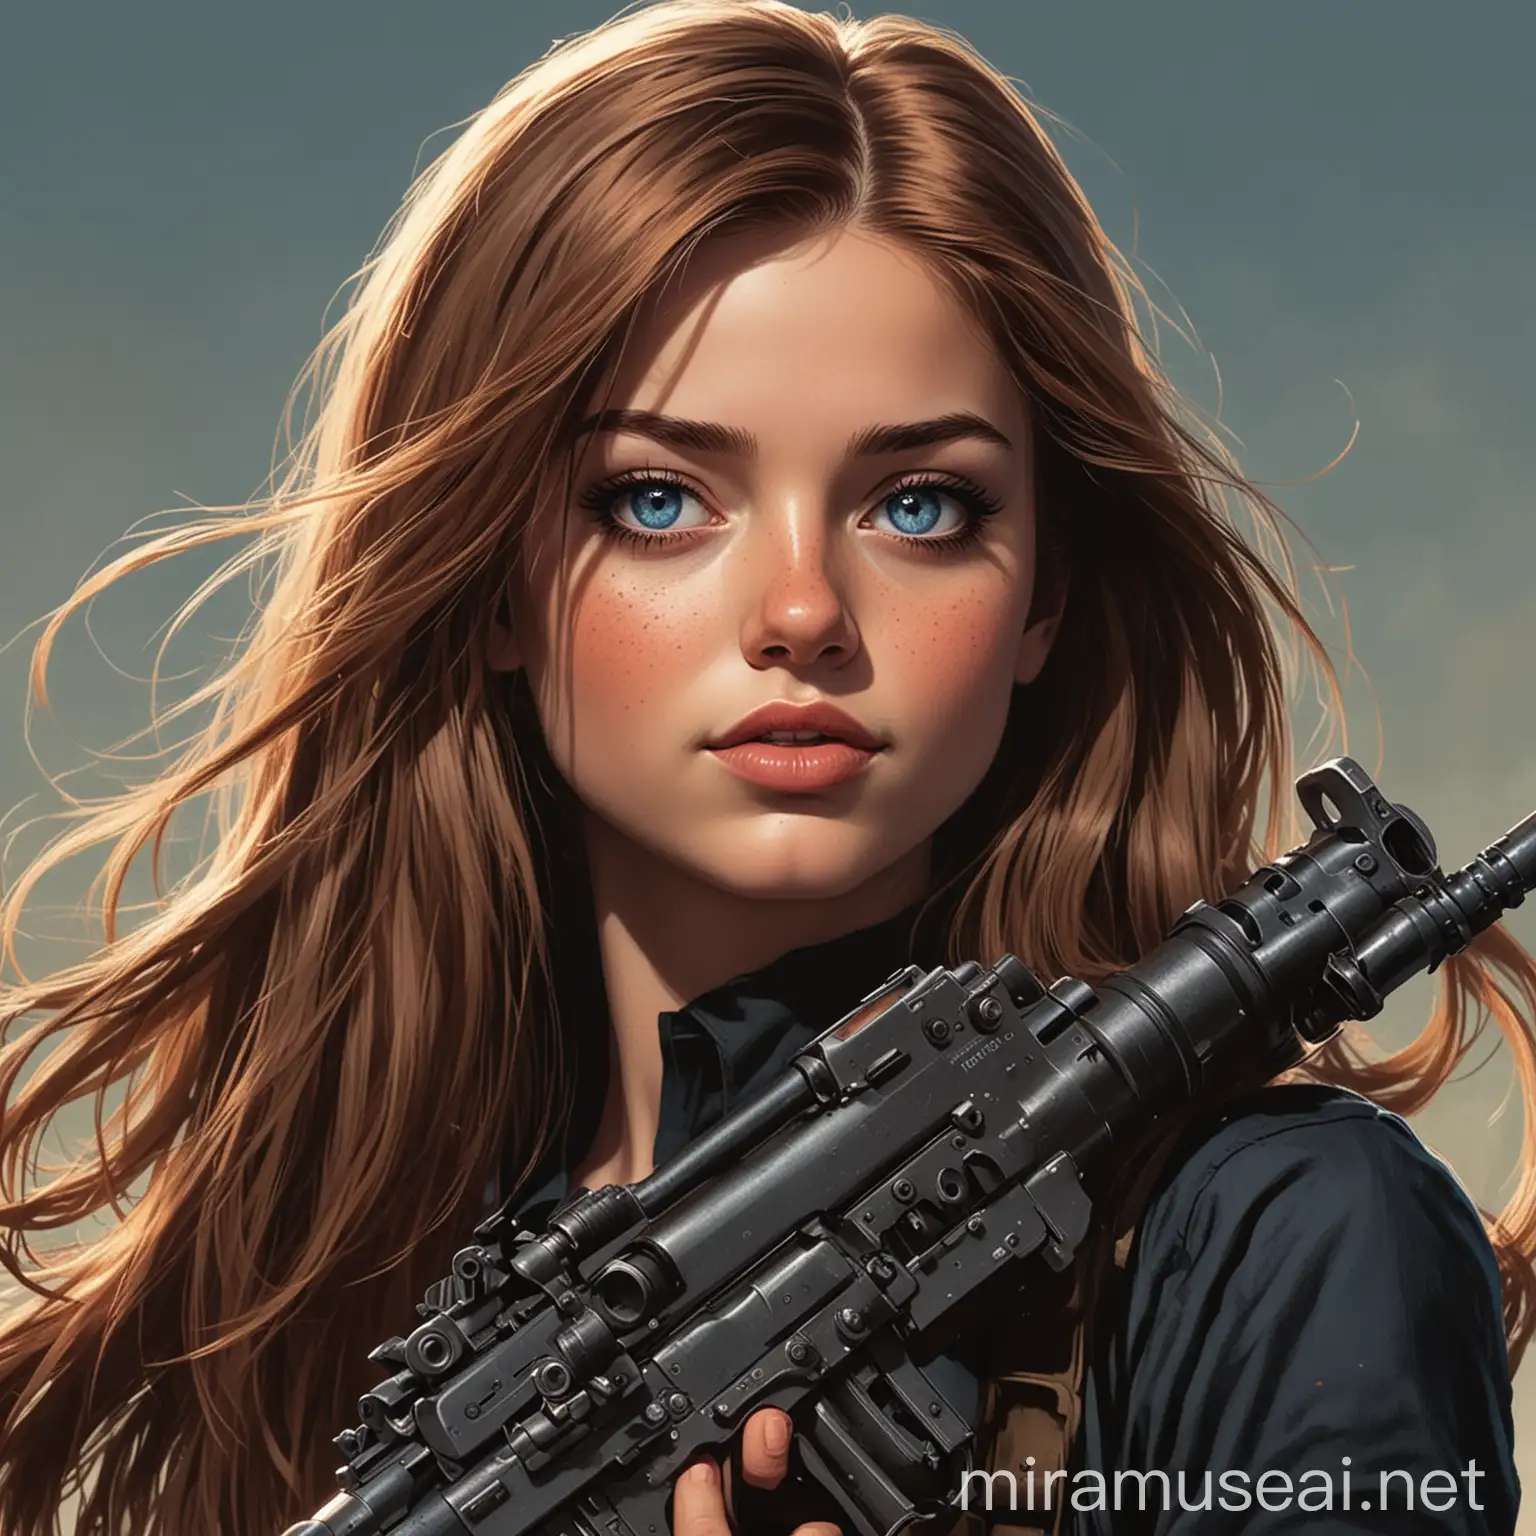 Fierce Heroine with Blue Eyes and Long Brown Hair Wielding a Machine Gun Marvel Comic Book Style Art